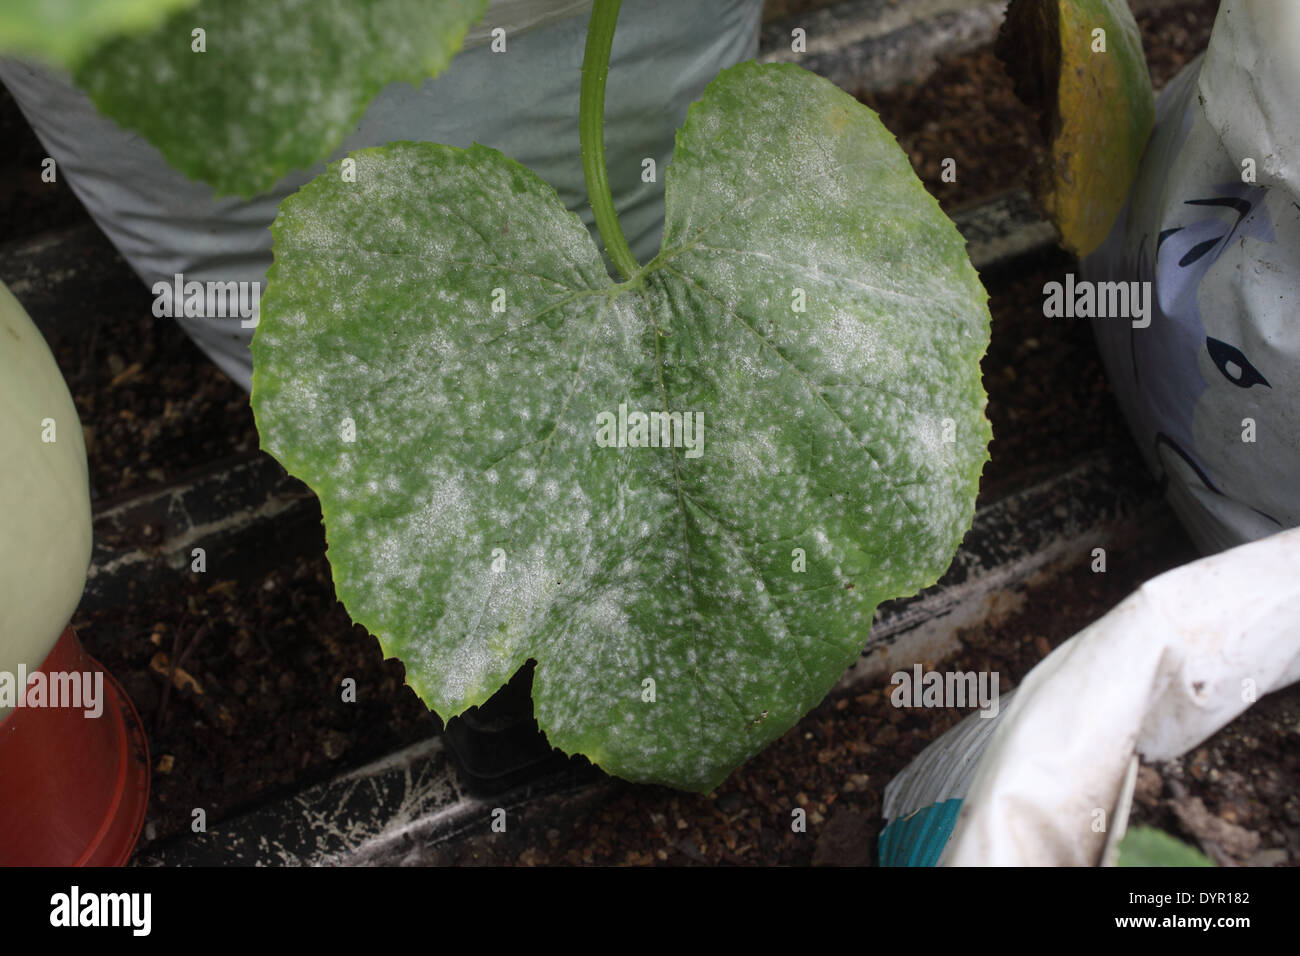 Erysiphe cichoracearum Cucurbit powdery mildew attack on squash Stock Photo